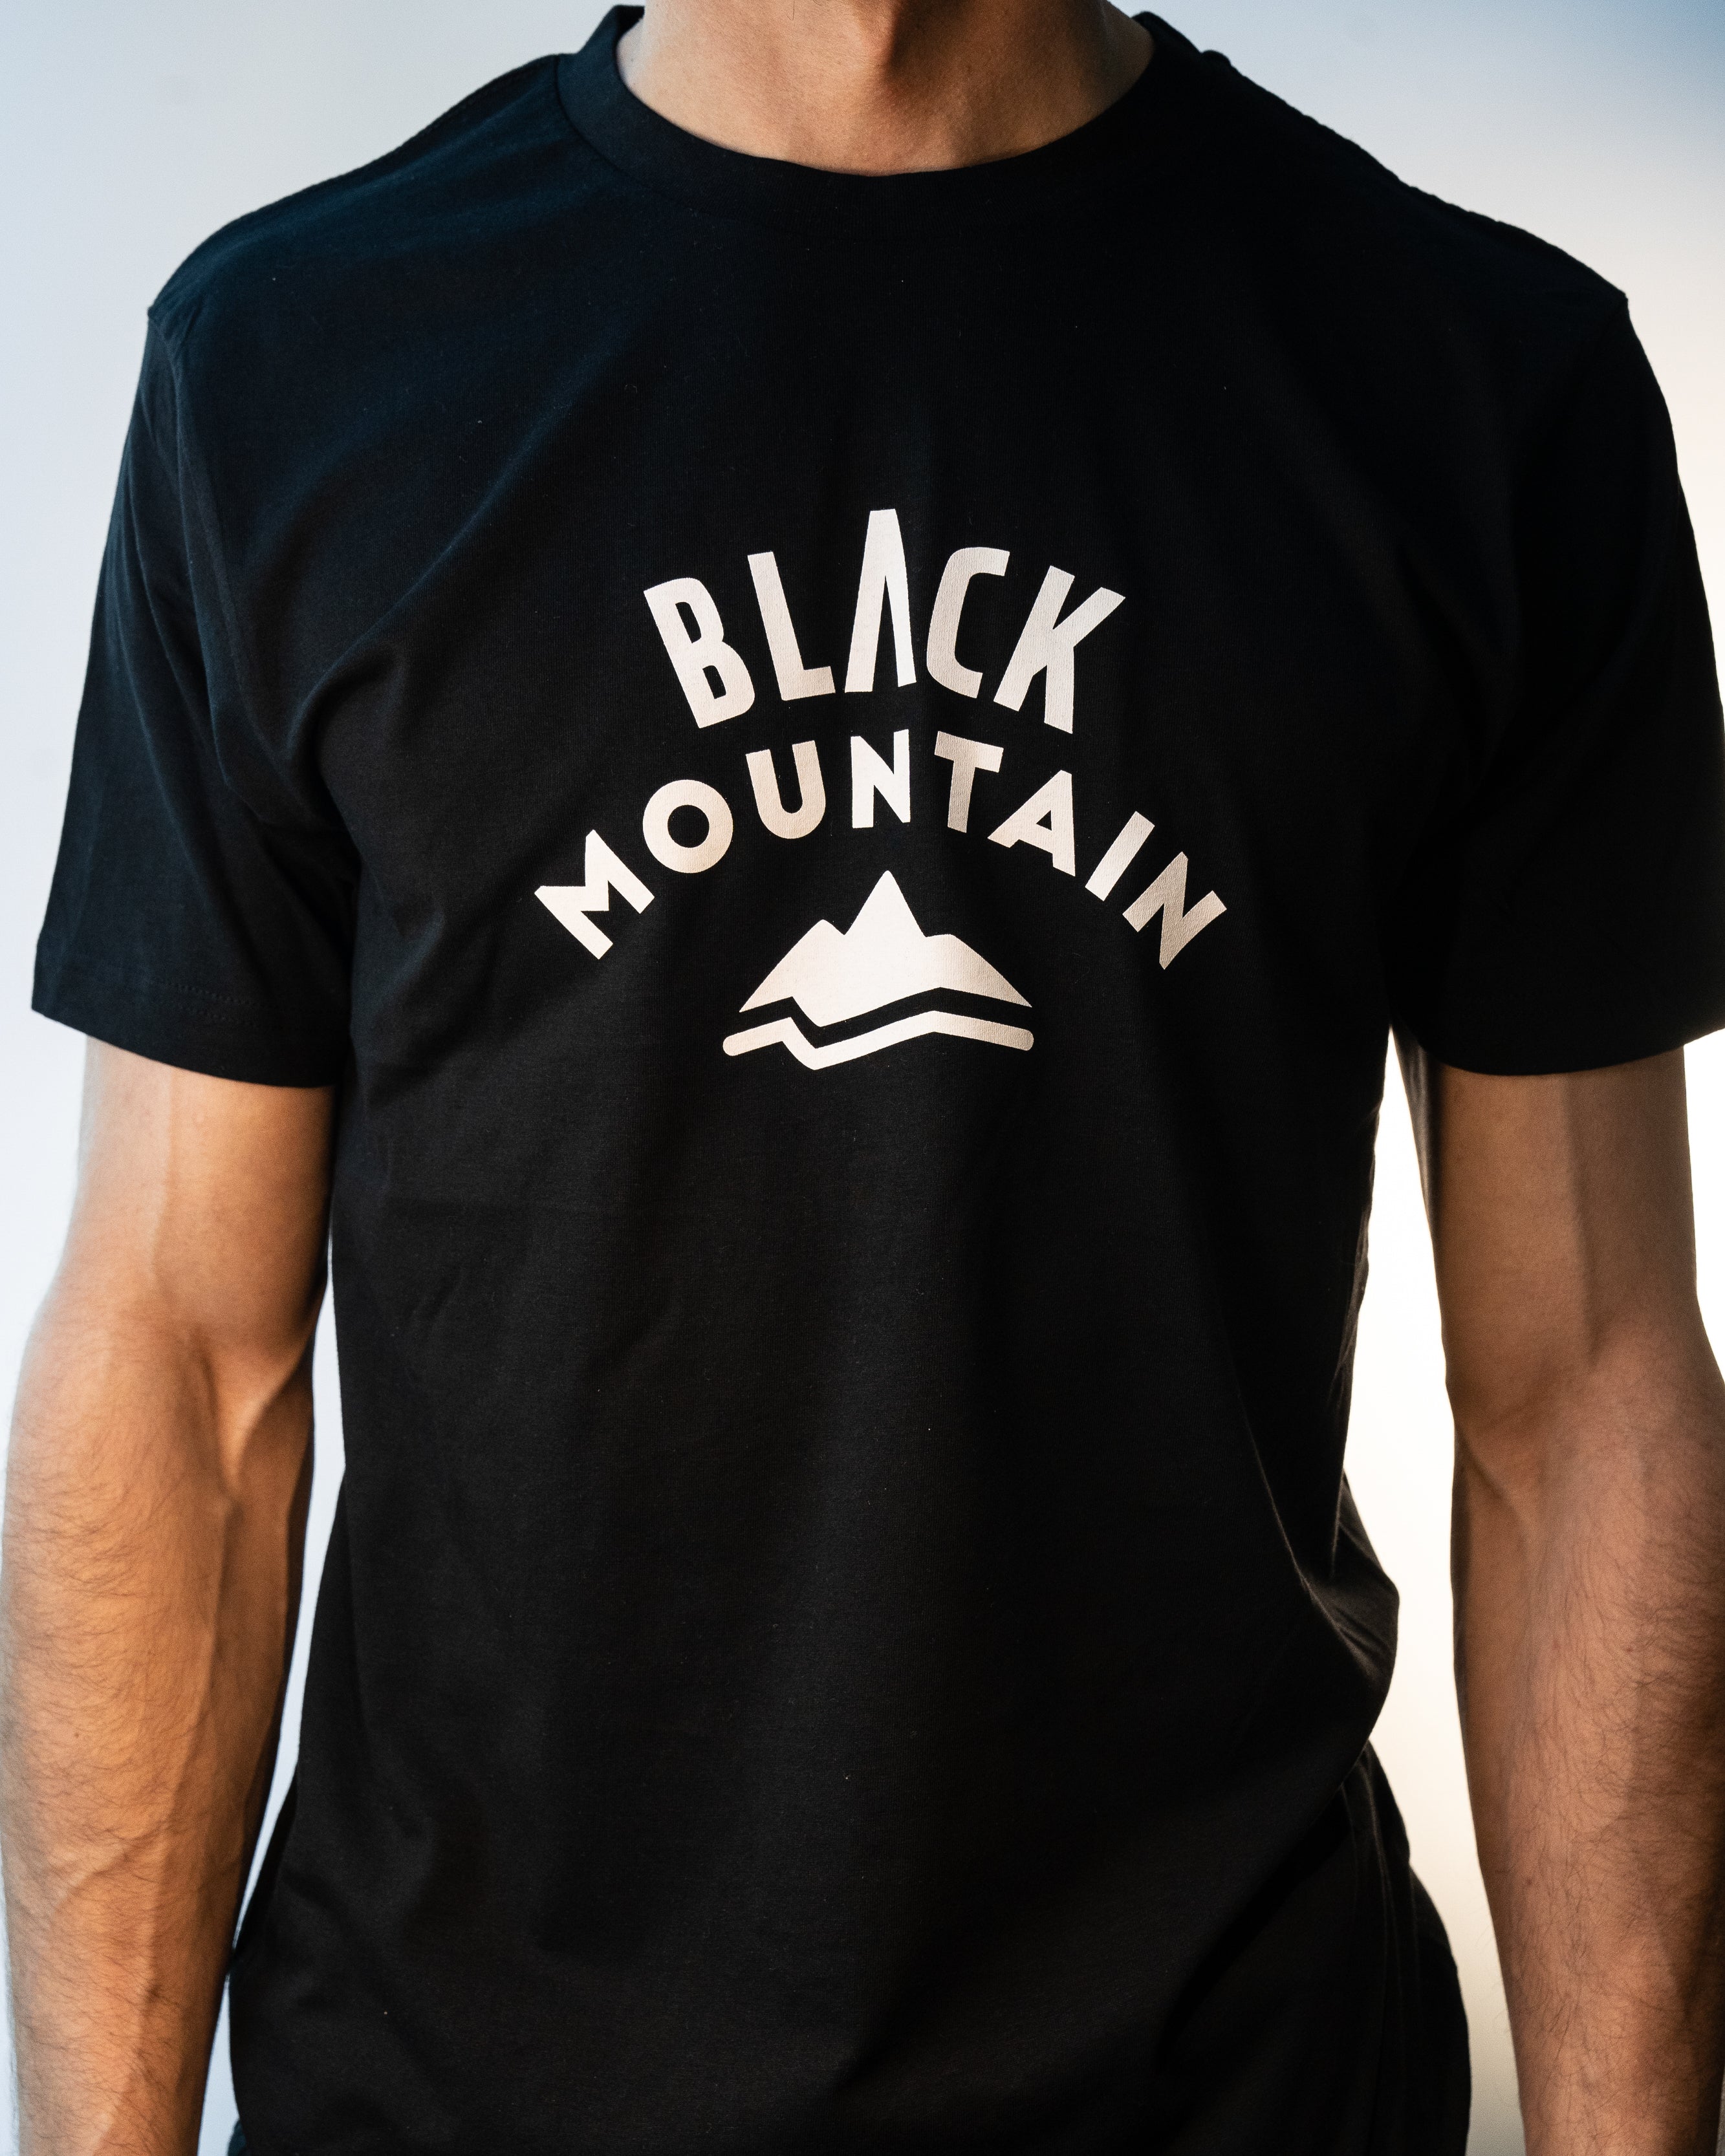 Black Mountain t-shirt